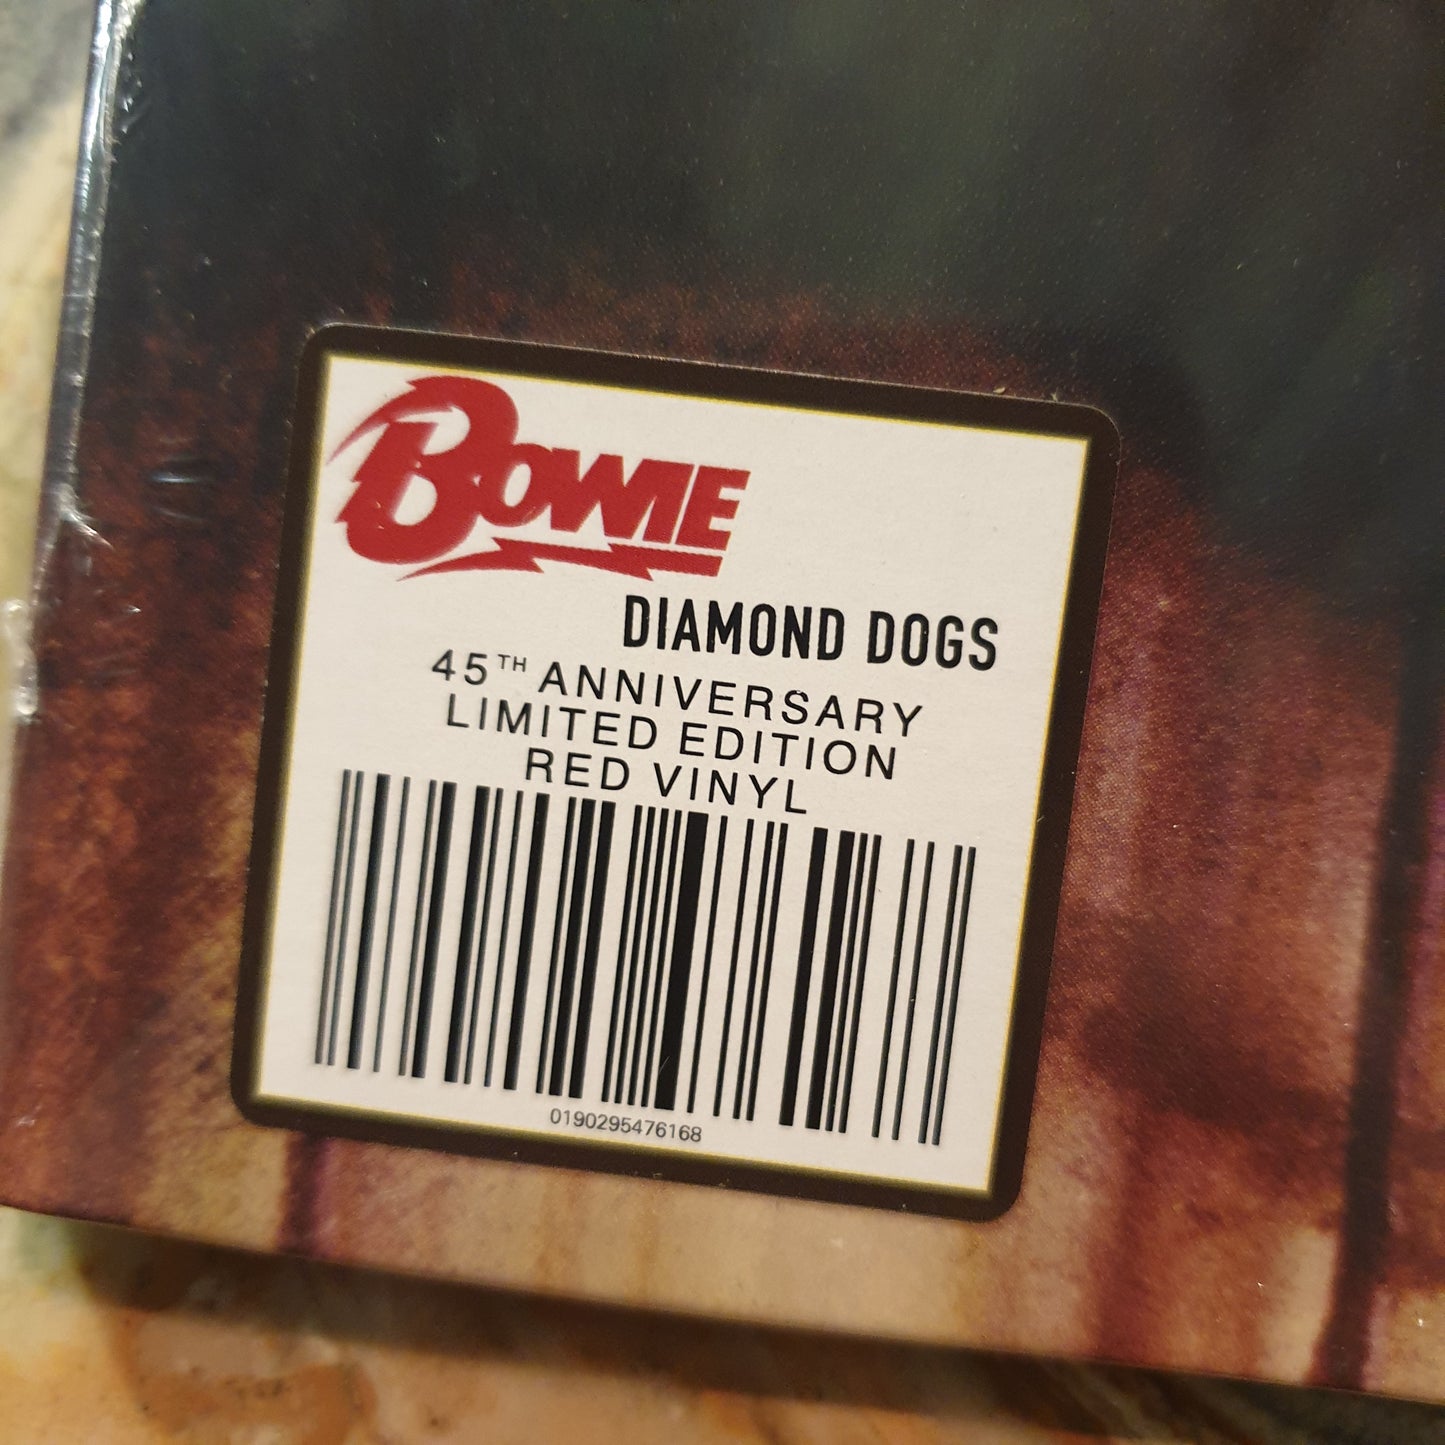 NEW - David Bowie, Diamond Dogs 45th Anniversary Red Vinyl